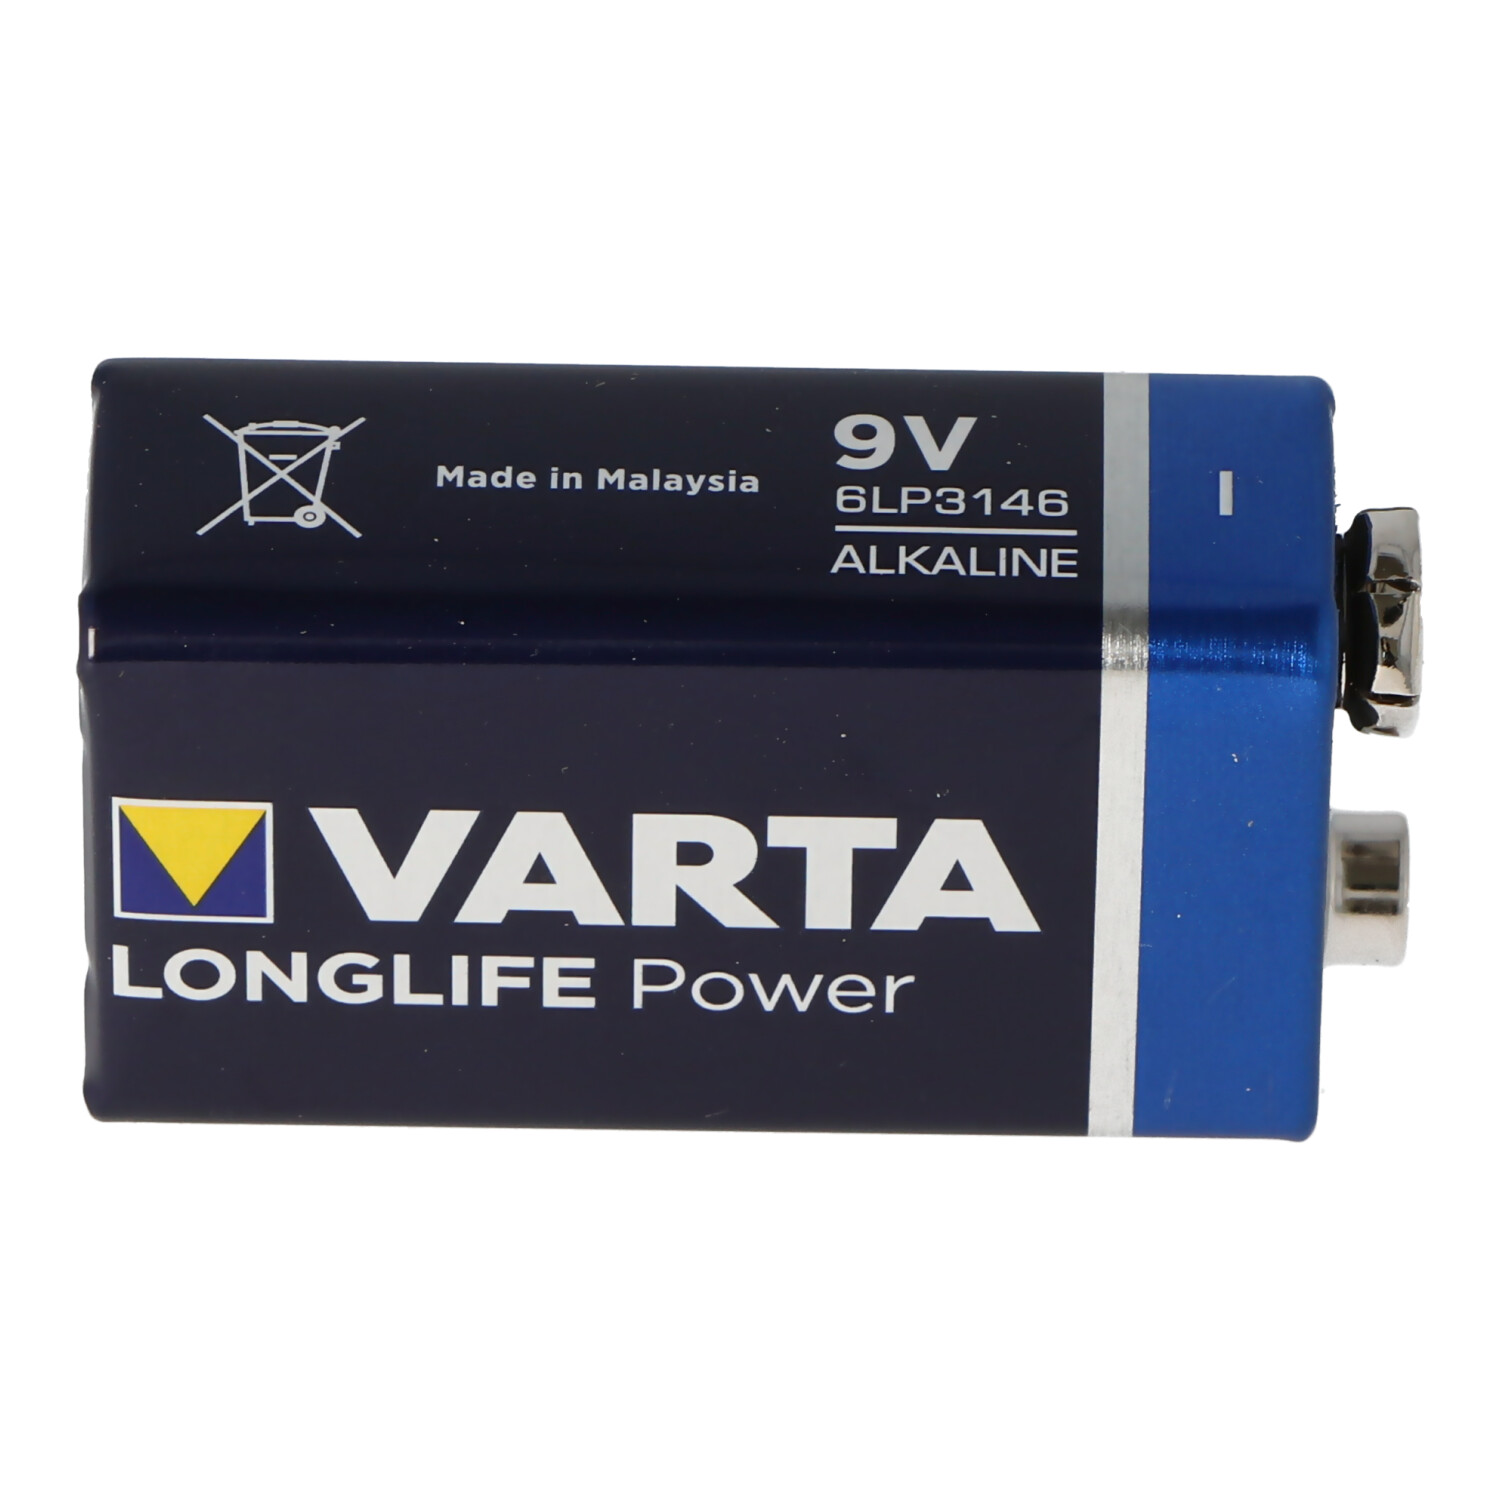 Varta Longlife Power (ehem. High Energy) 9-Volt Block Batterie 1 Stück lose Ware unverpackt